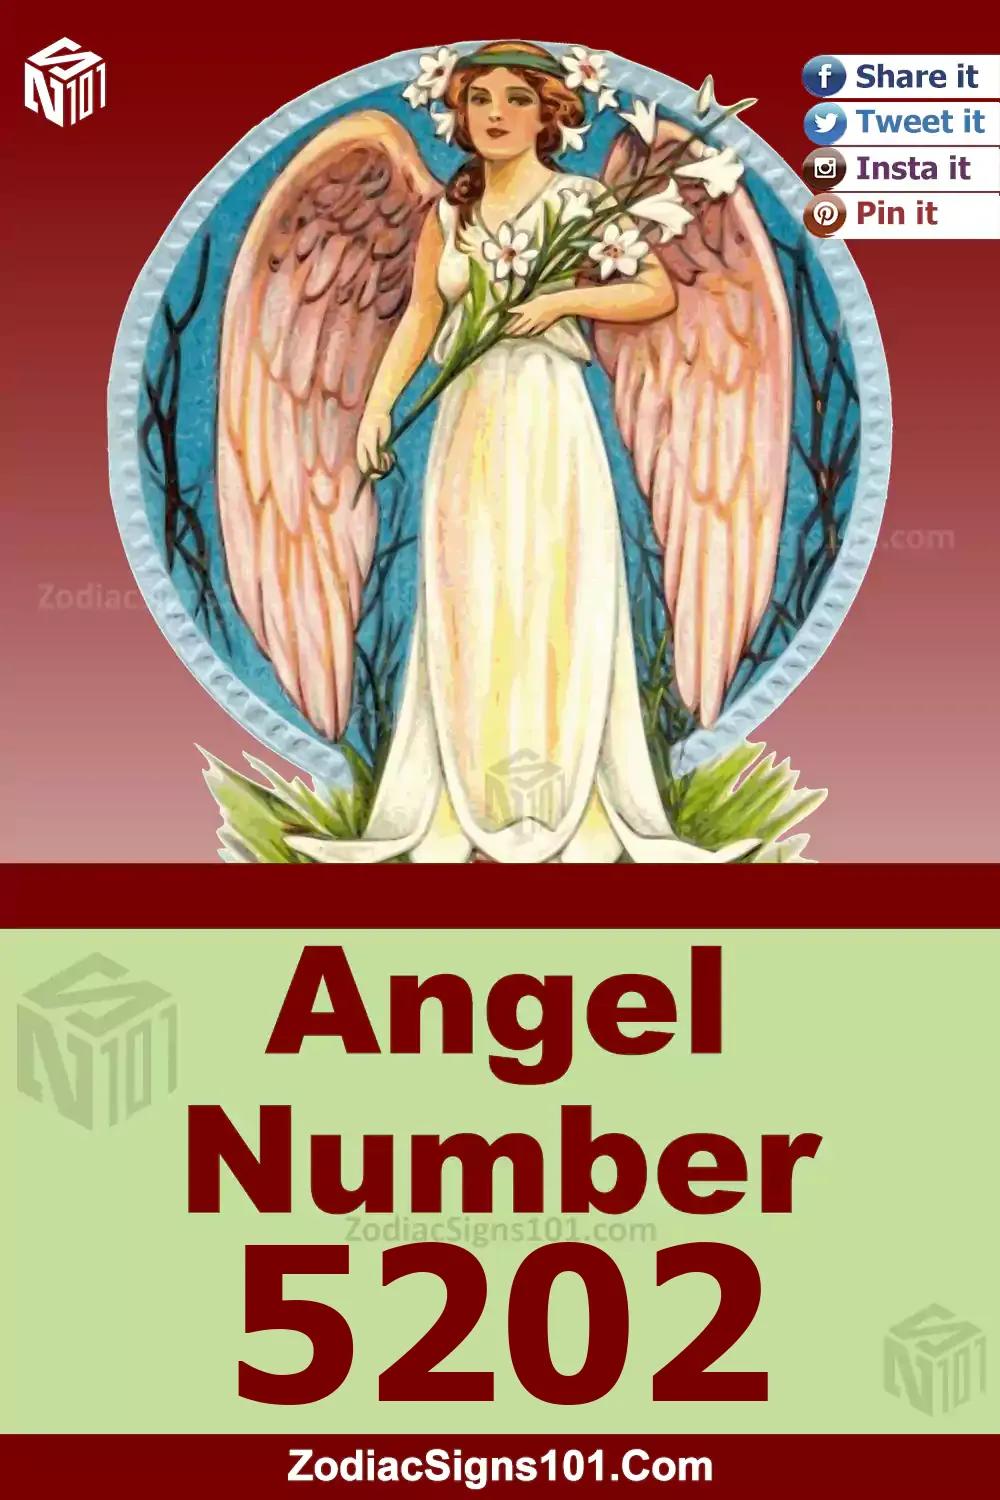 5202-Angel-Number-Meaning.jpg